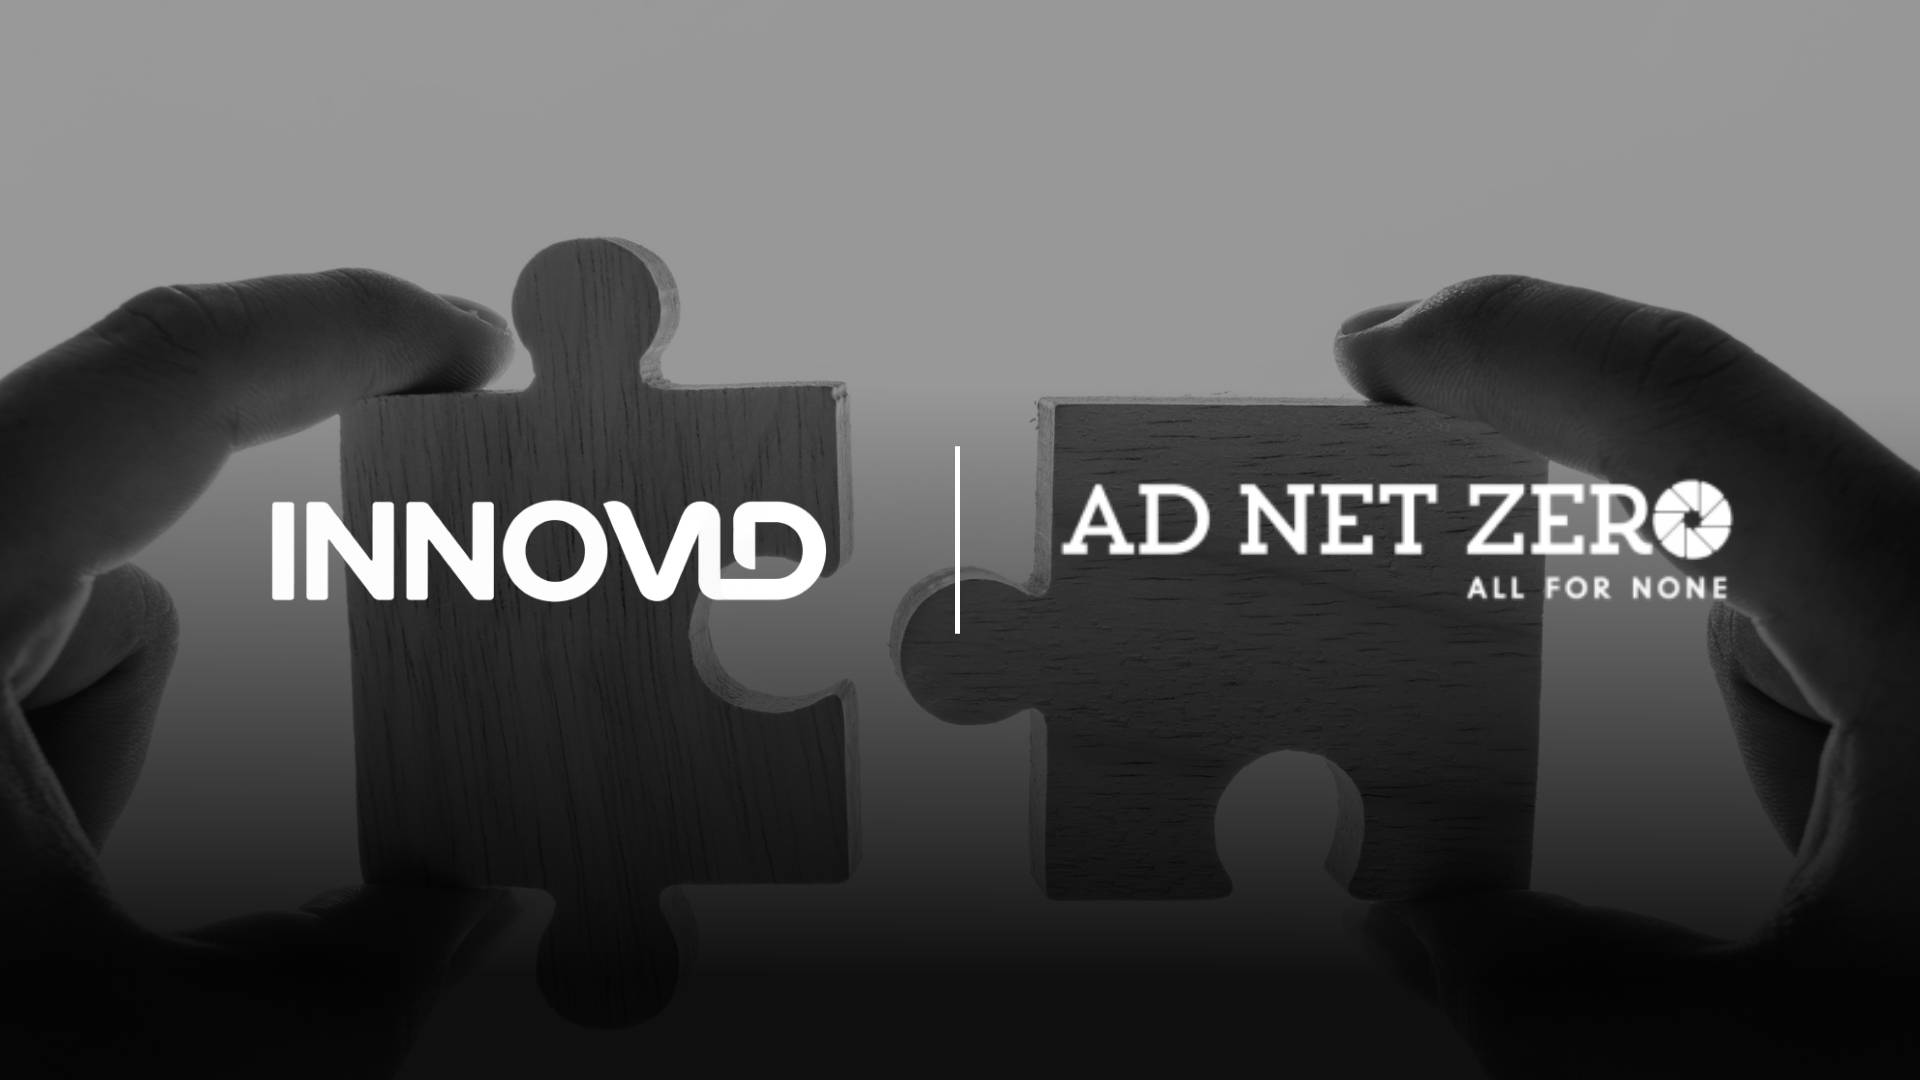  Innovid Joins Ad Net Zero, Pledges Sustainability in Advertising